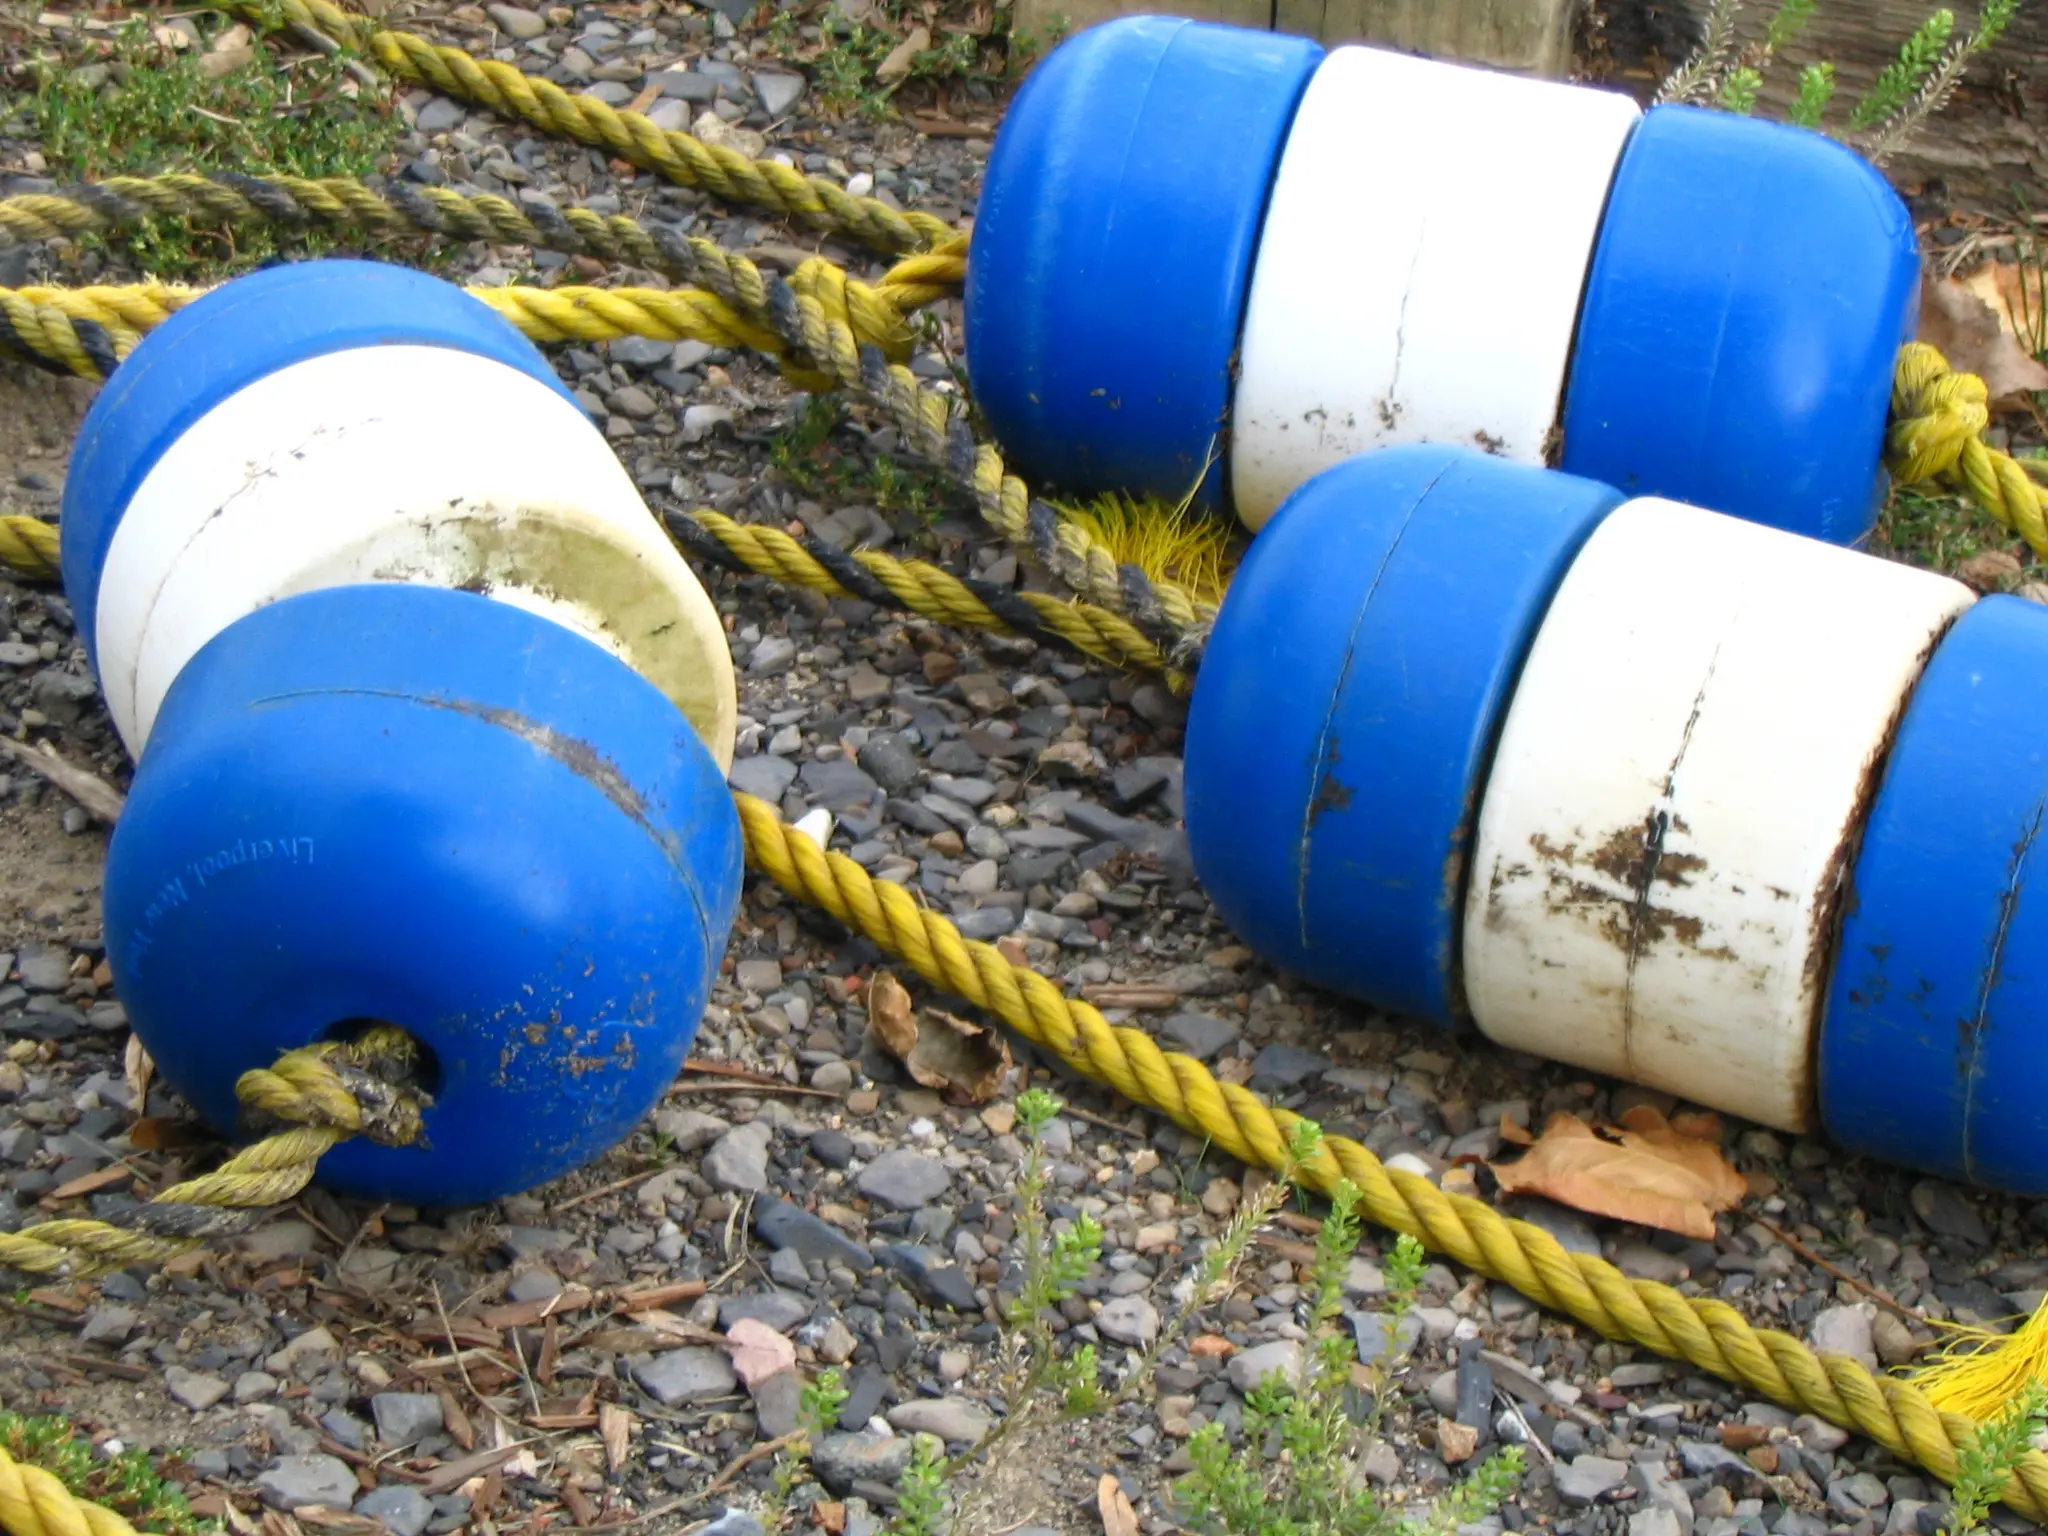 Small swim buoys sitting on the ground